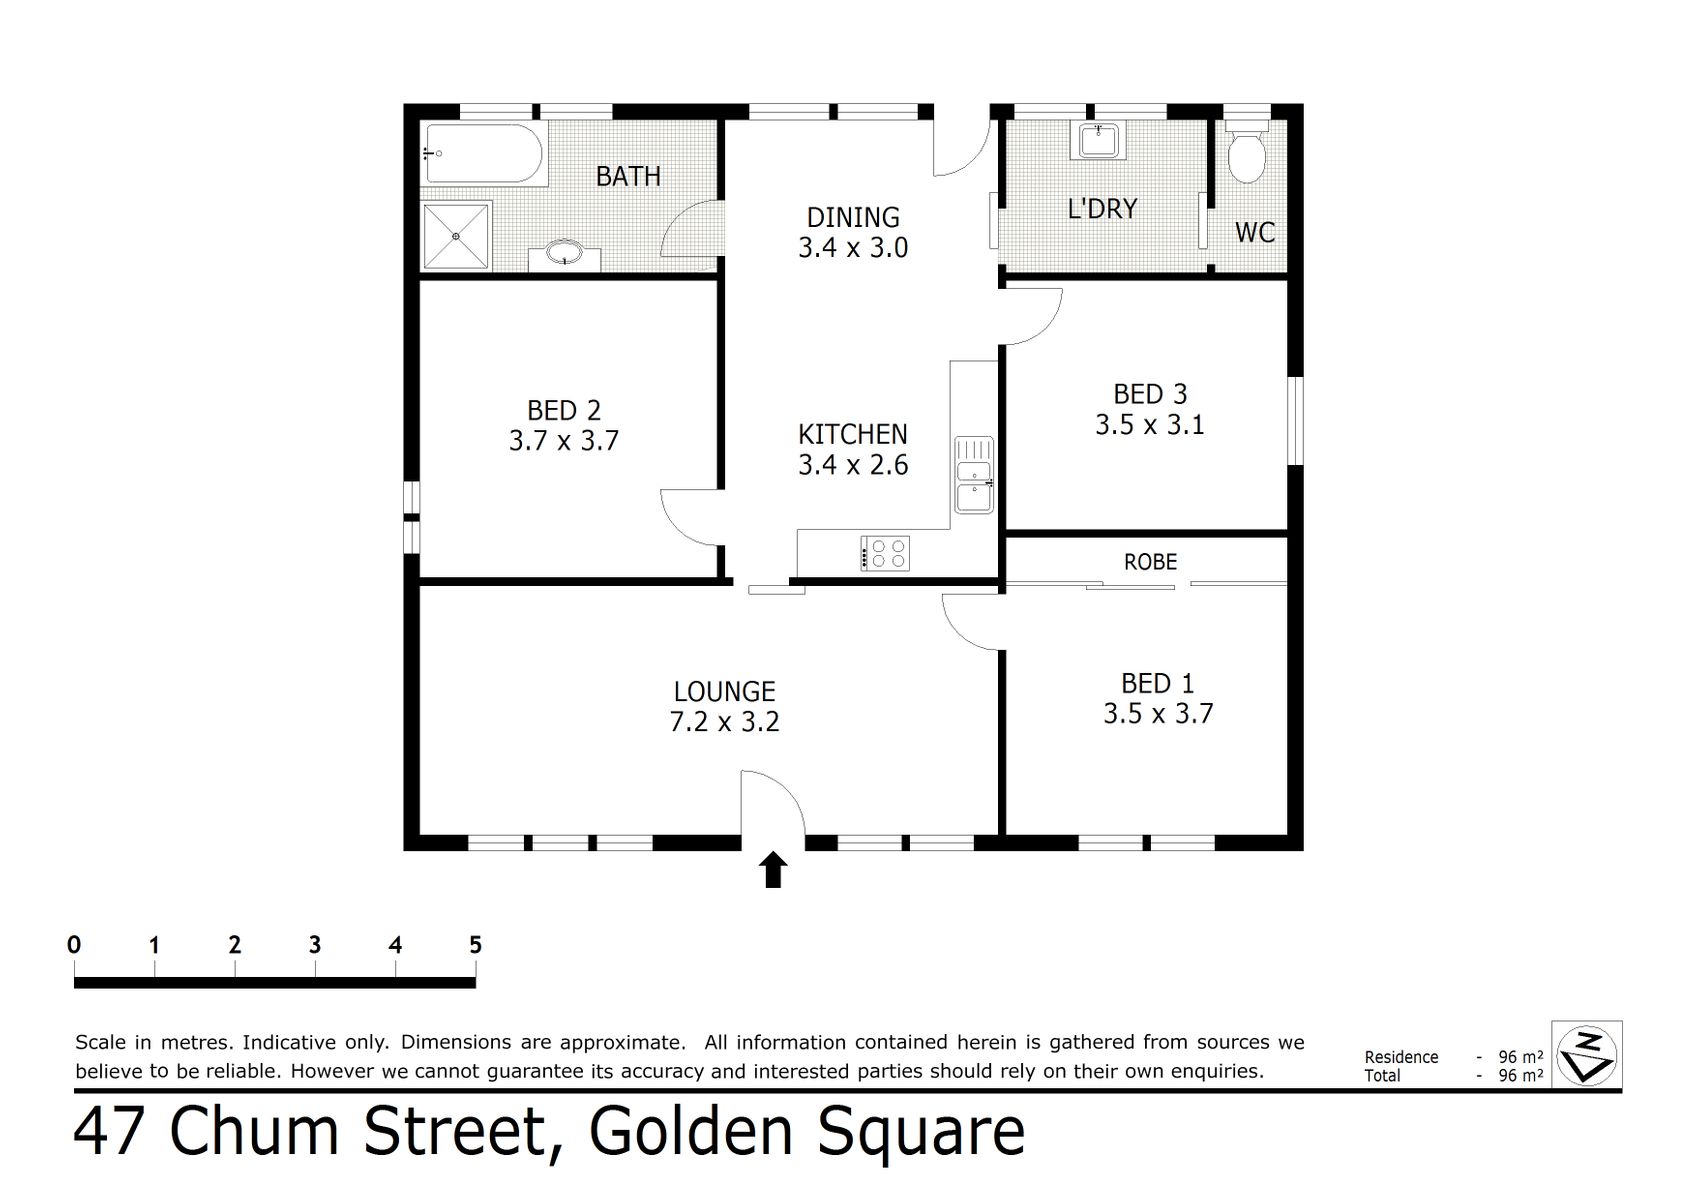 Floor Plan 47 Chum Street Golden Square (03 MAR 2021) 96sqm